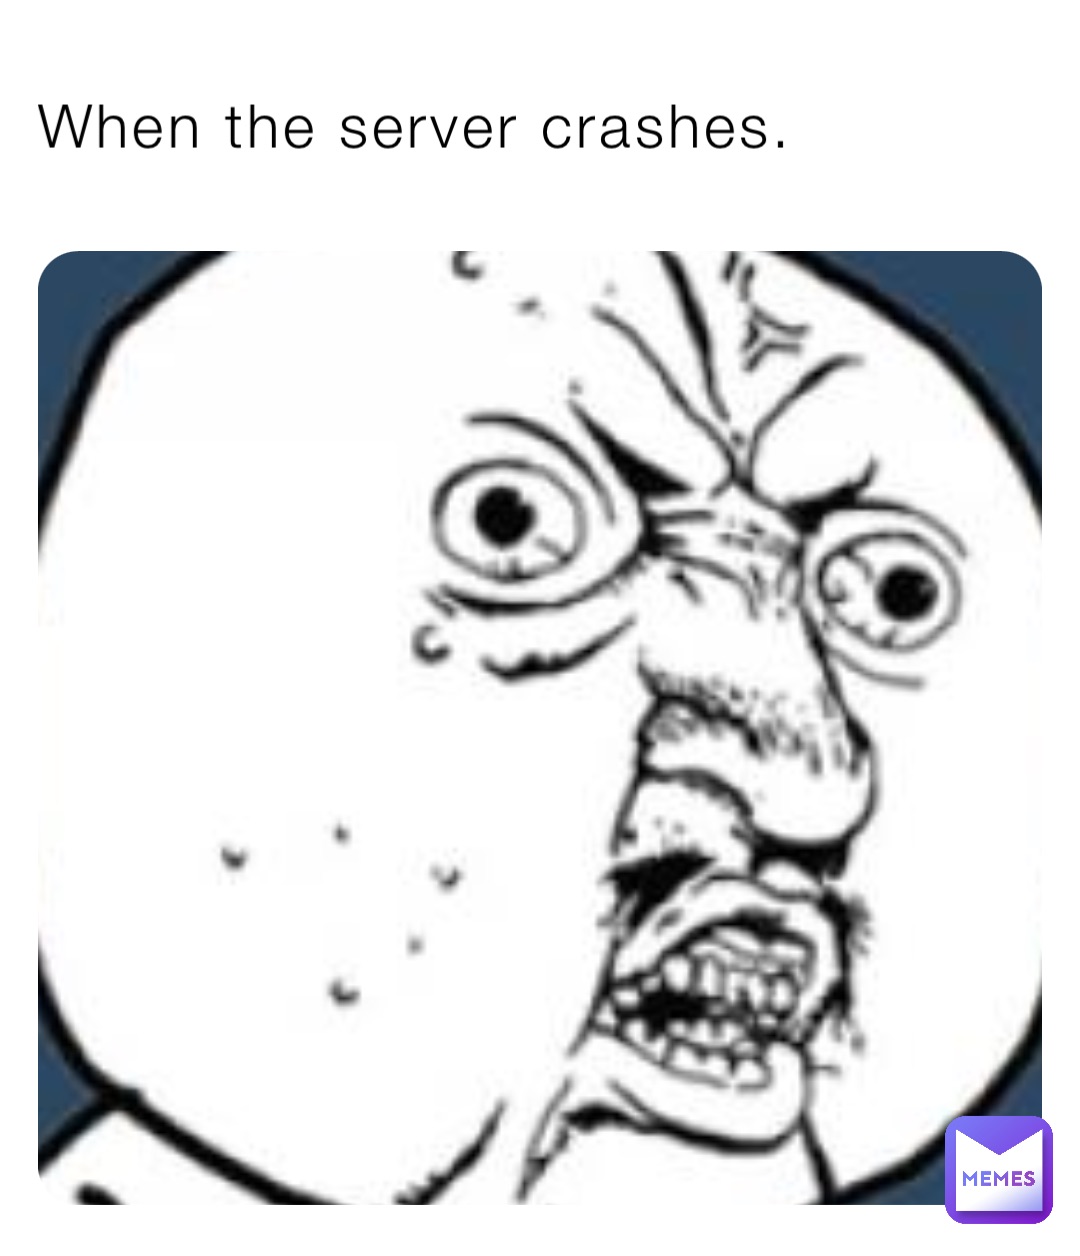 When the server crashes.